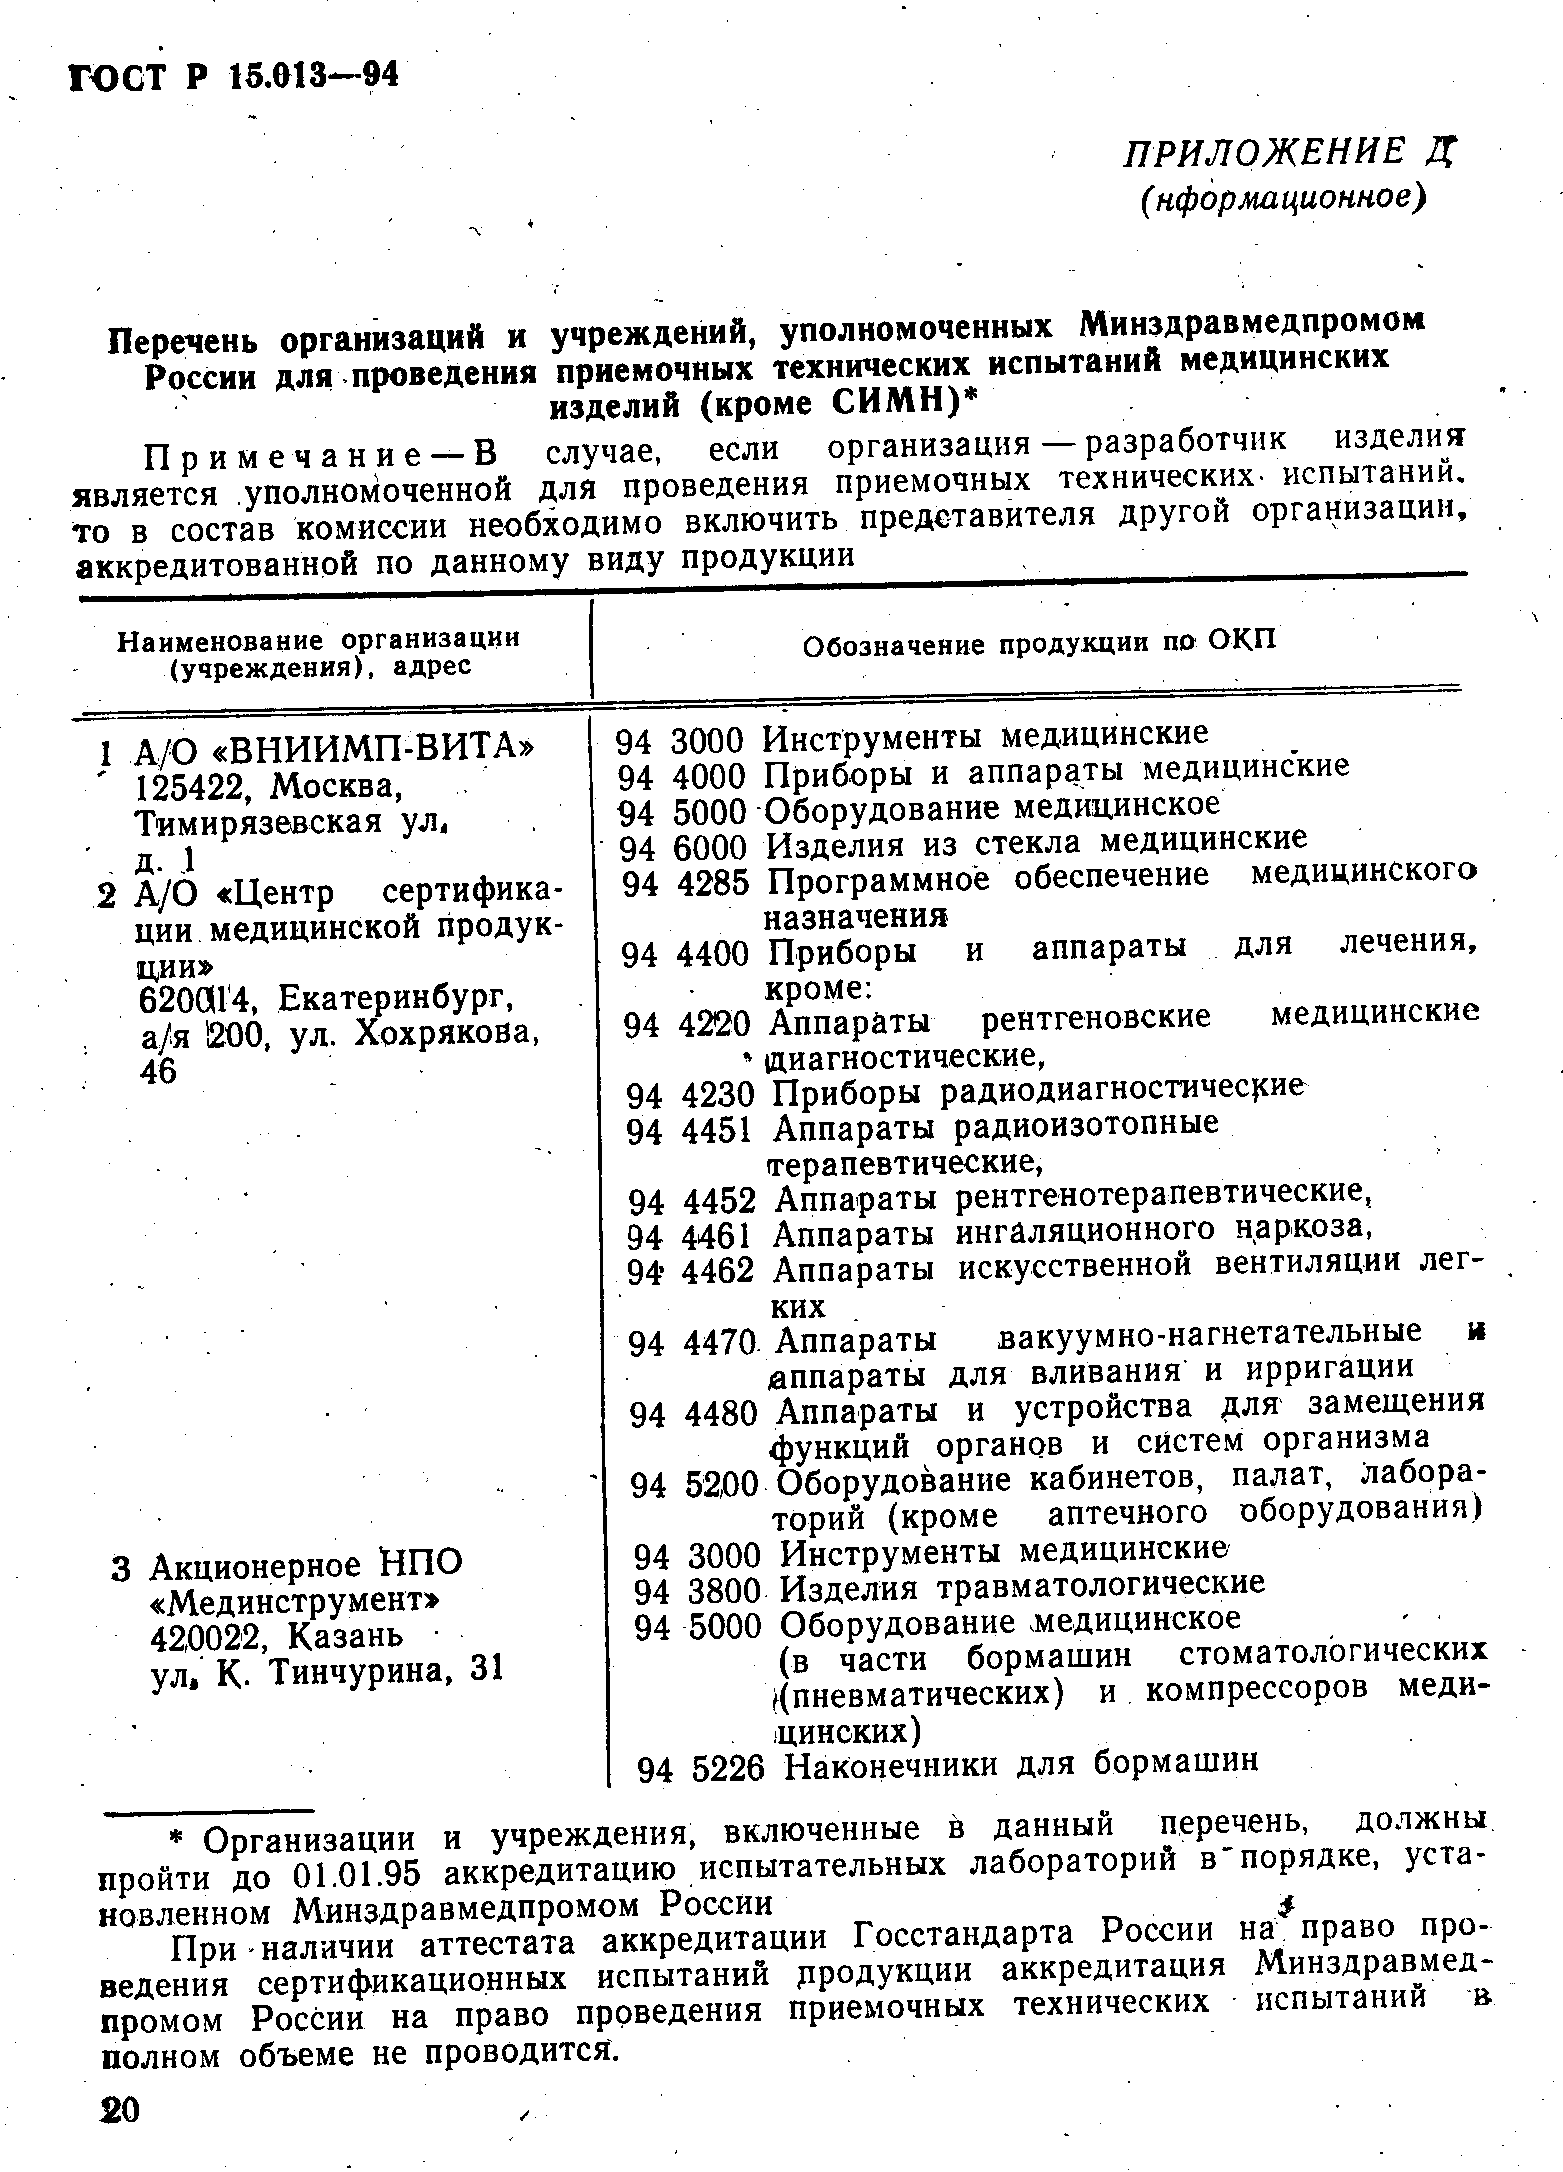 ГОСТ Р 15.013-94